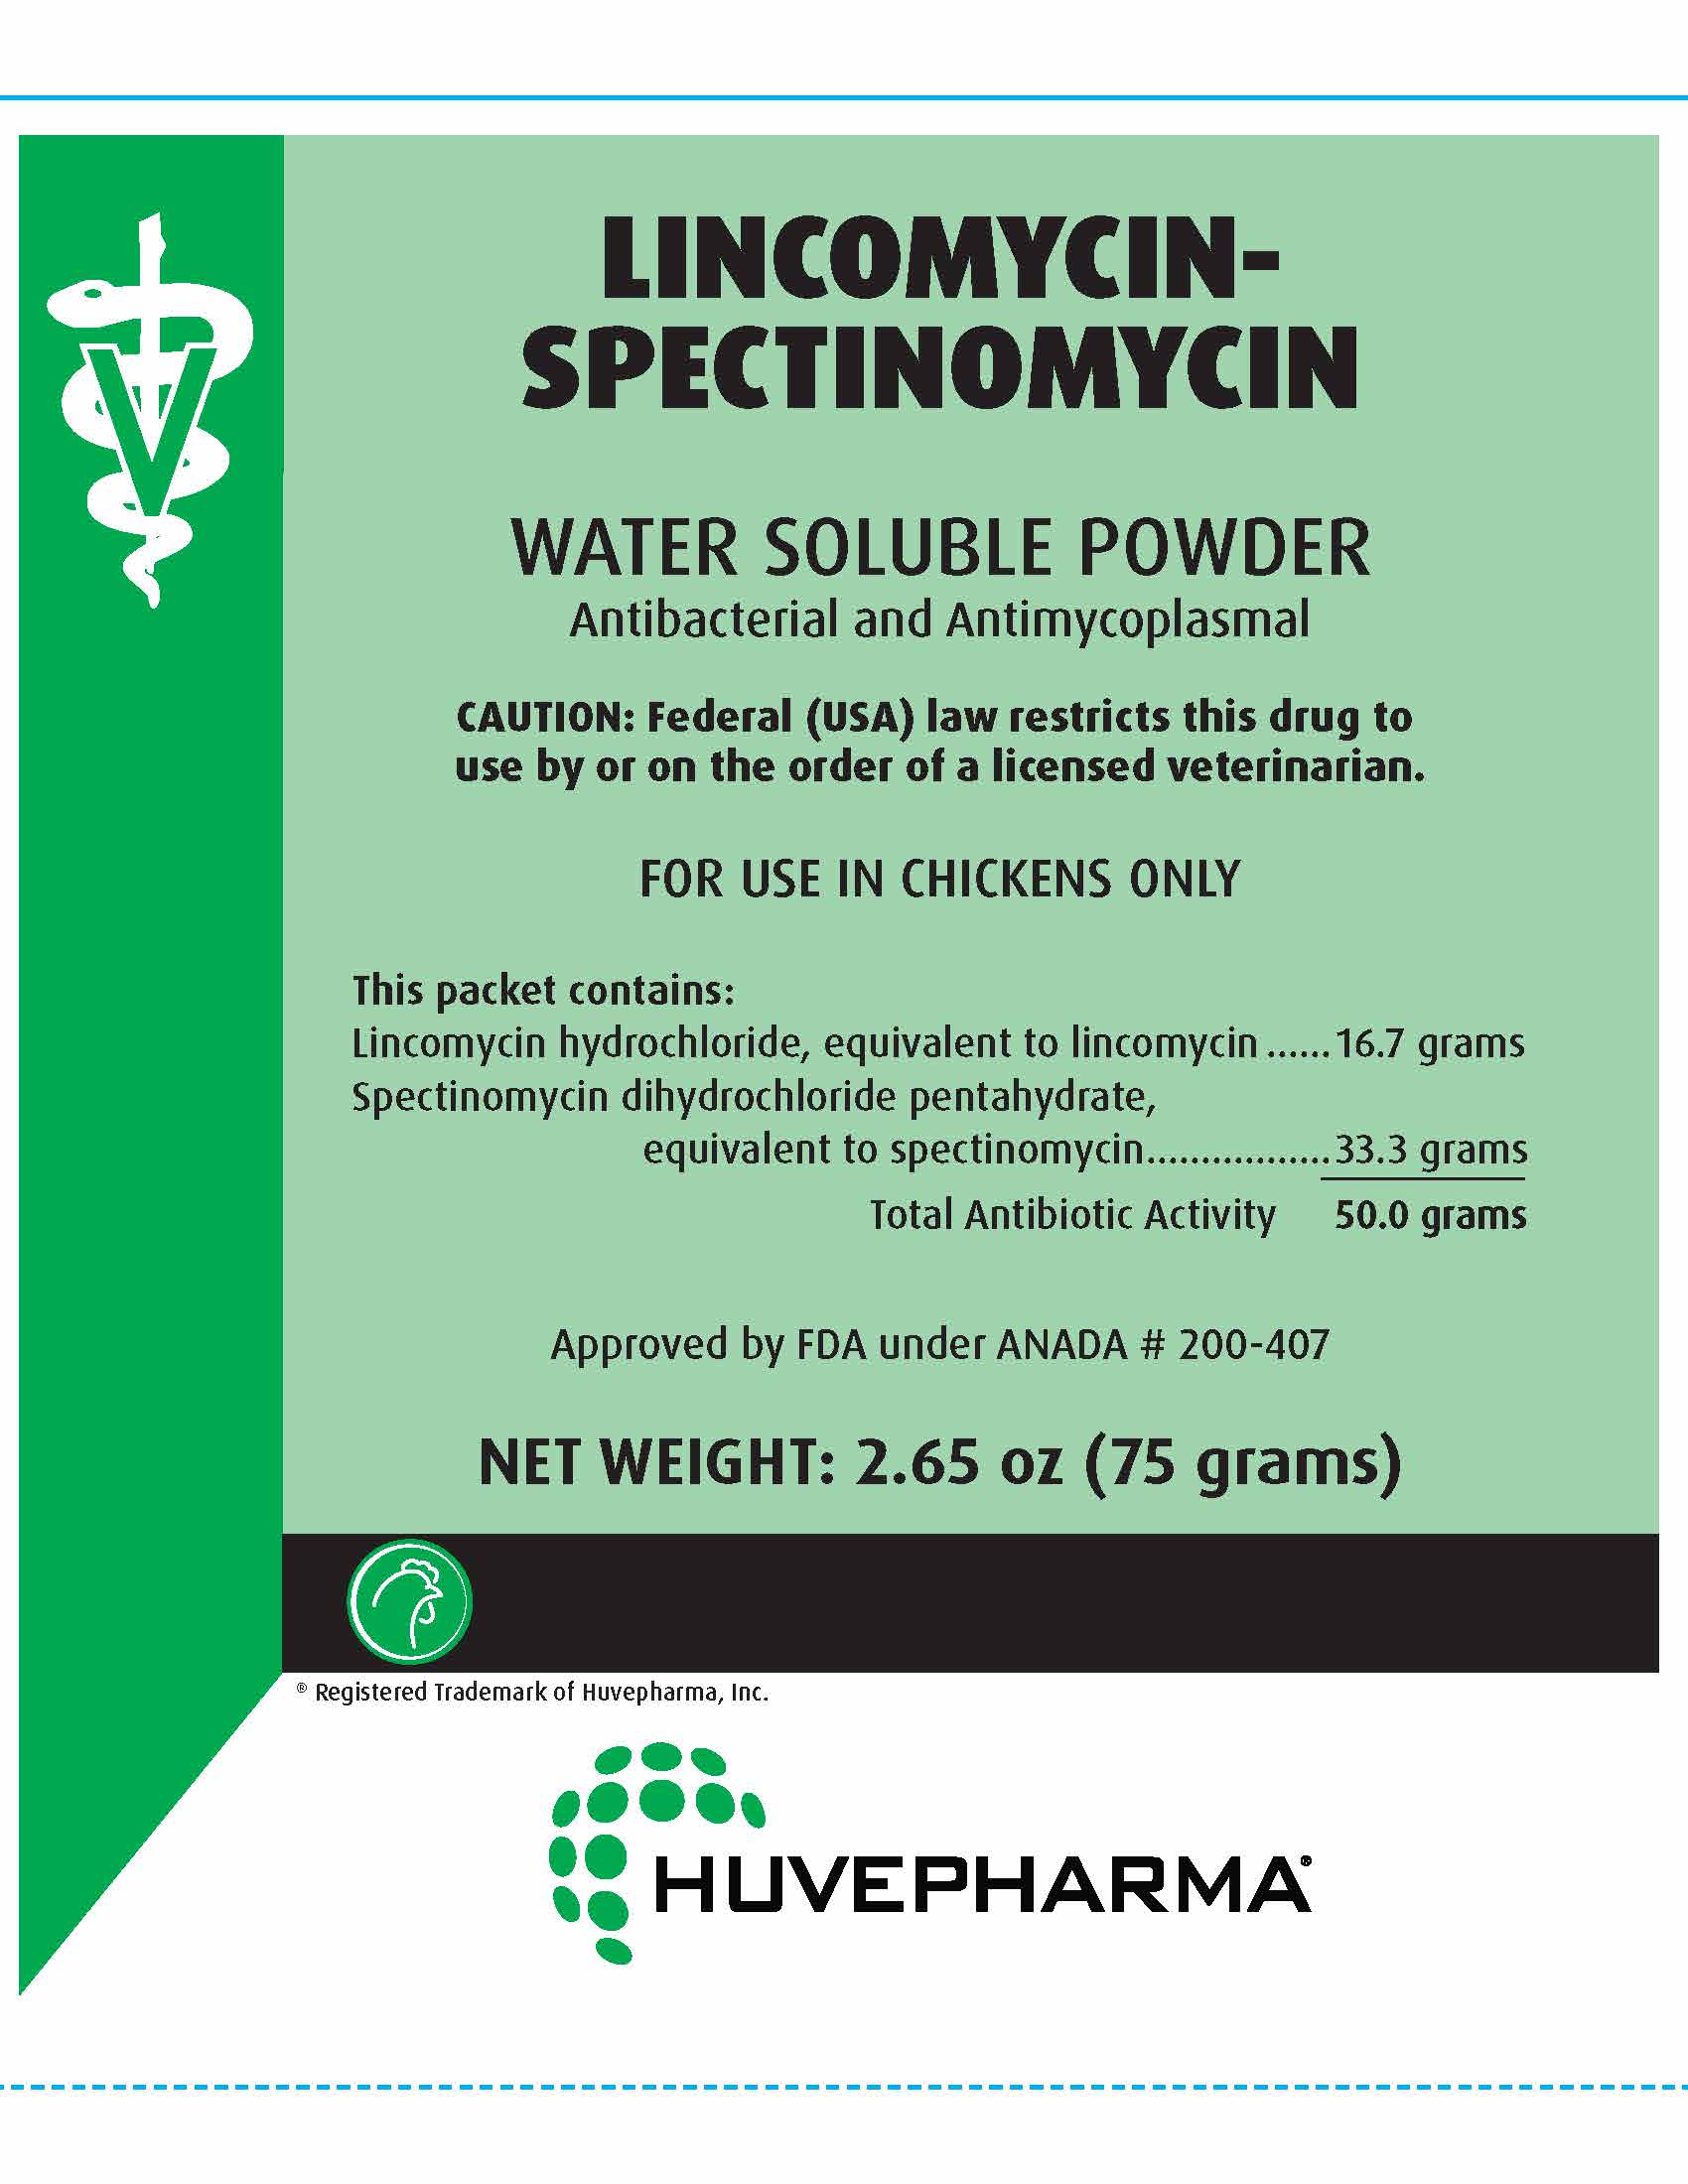 Lincomycin-Spectinomycin Packets Front